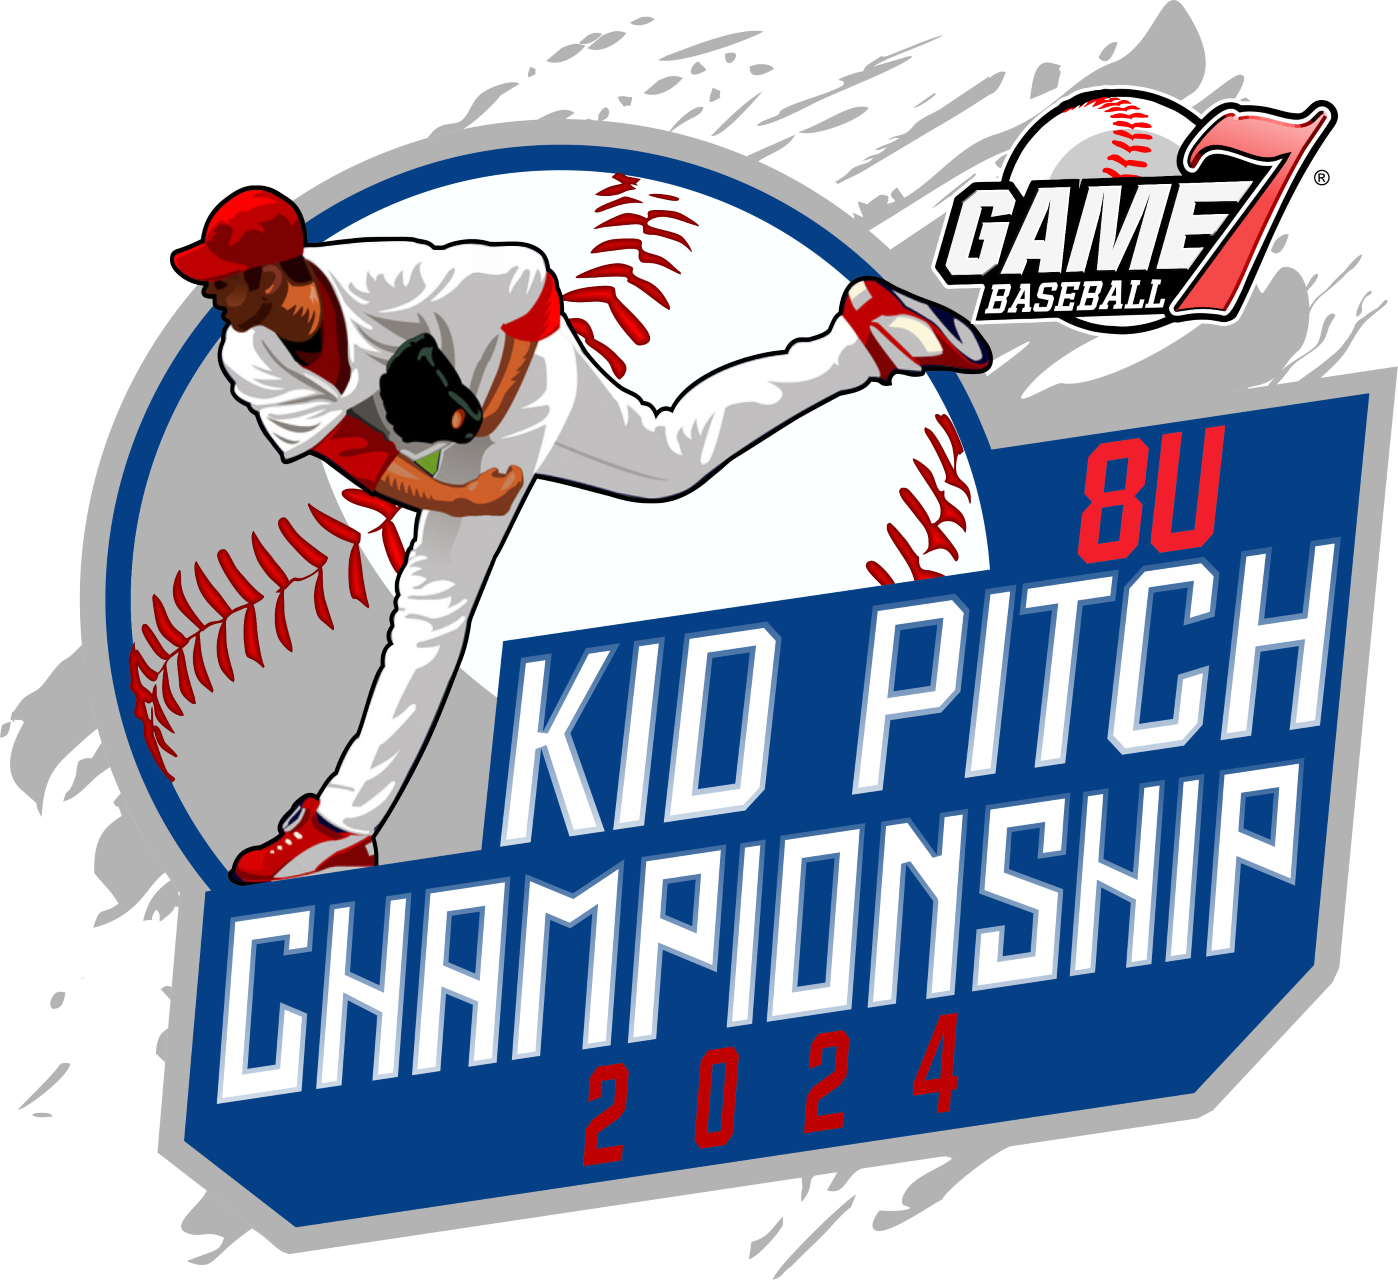 8U Kid Pitch Championship Logo